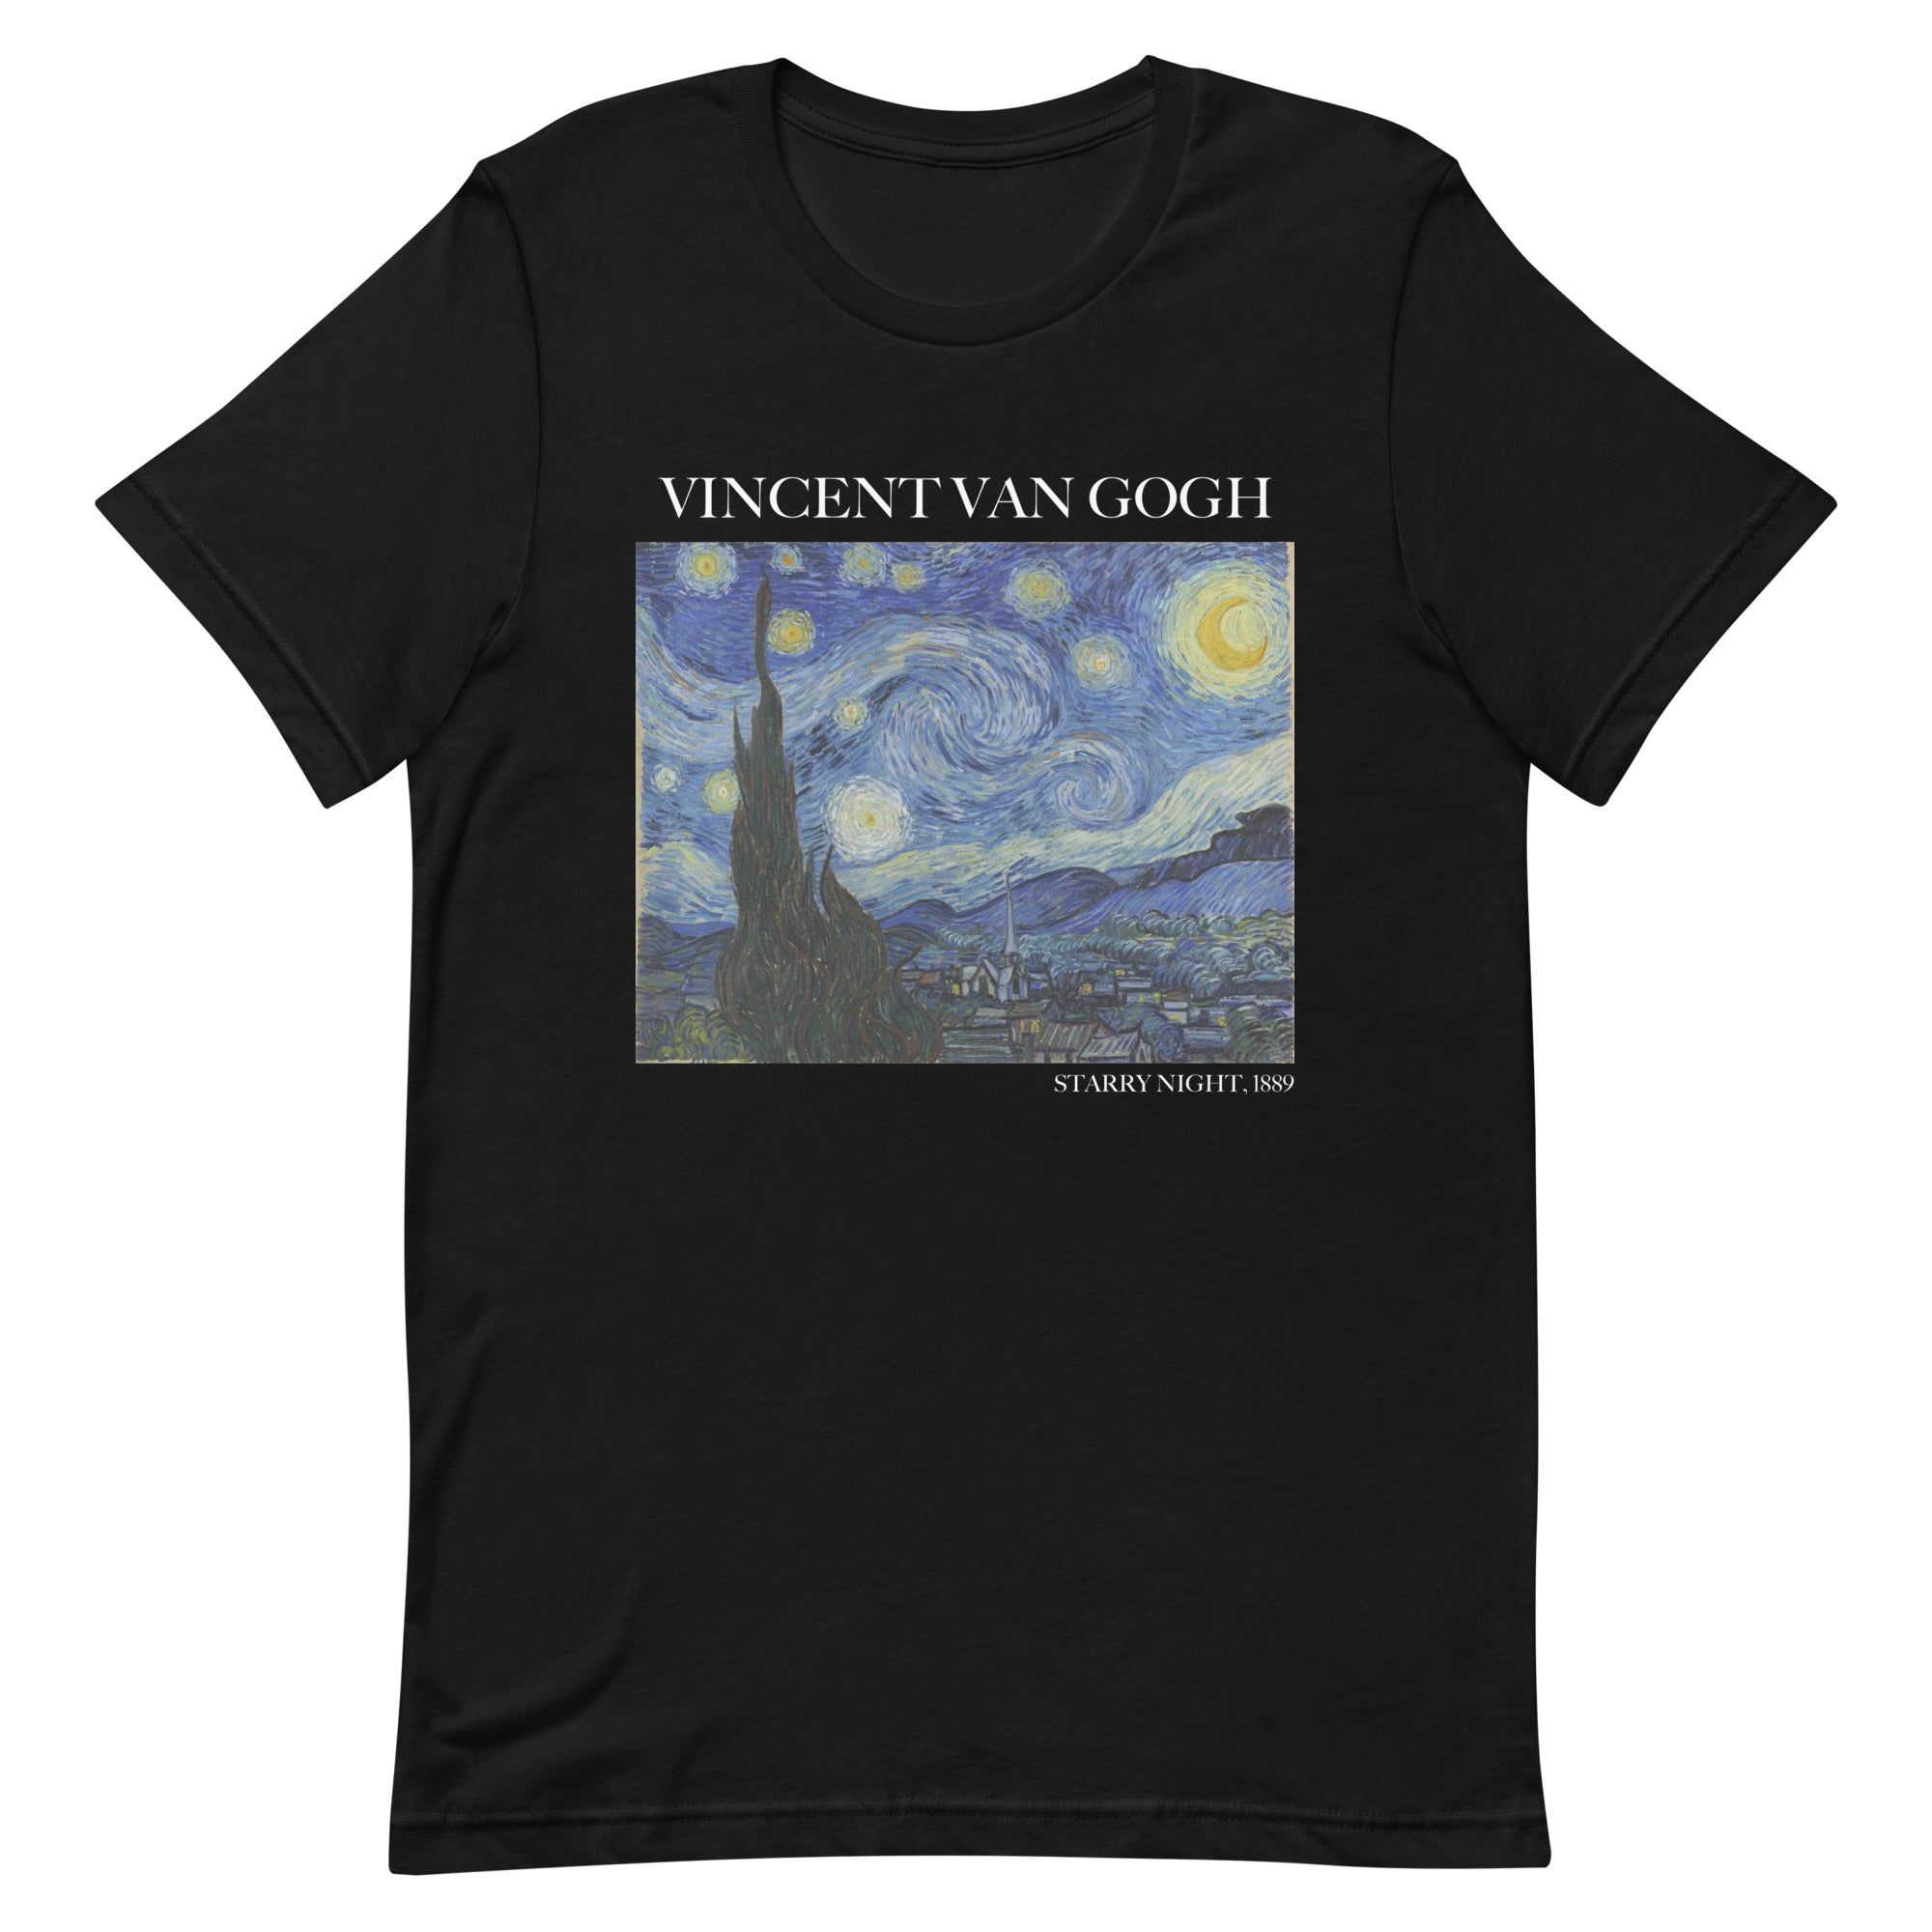 Vincent van Gogh 'Starry Night' Famous Painting T-Shirt | Unisex Classic Art Tee